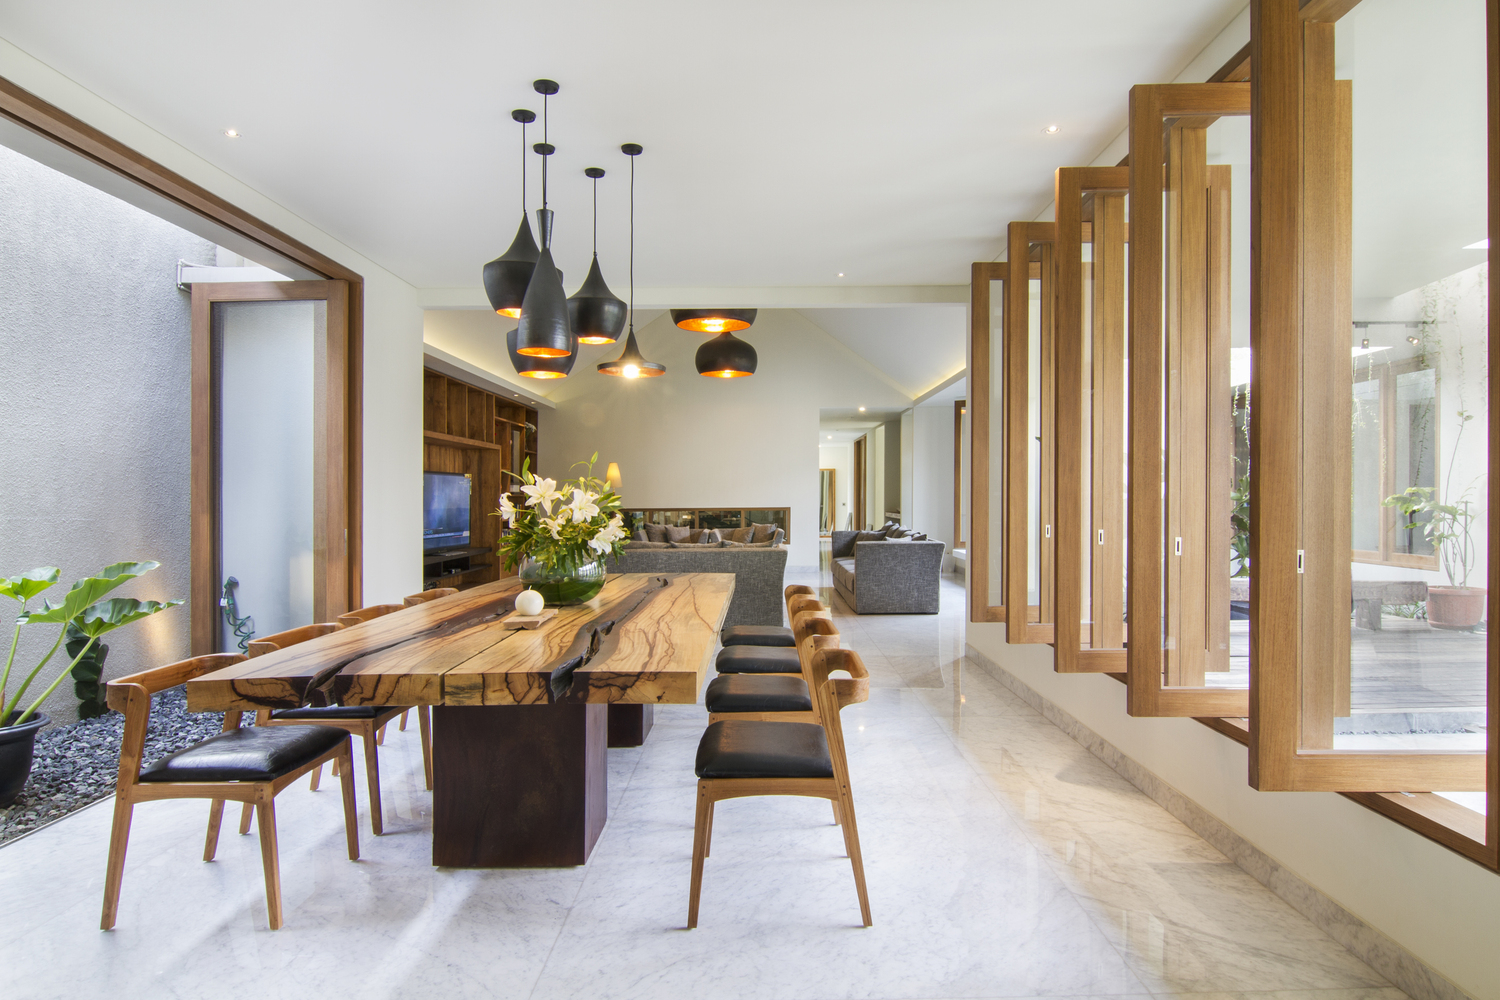 General 1500x1000 modern interior interior design table chair architecture